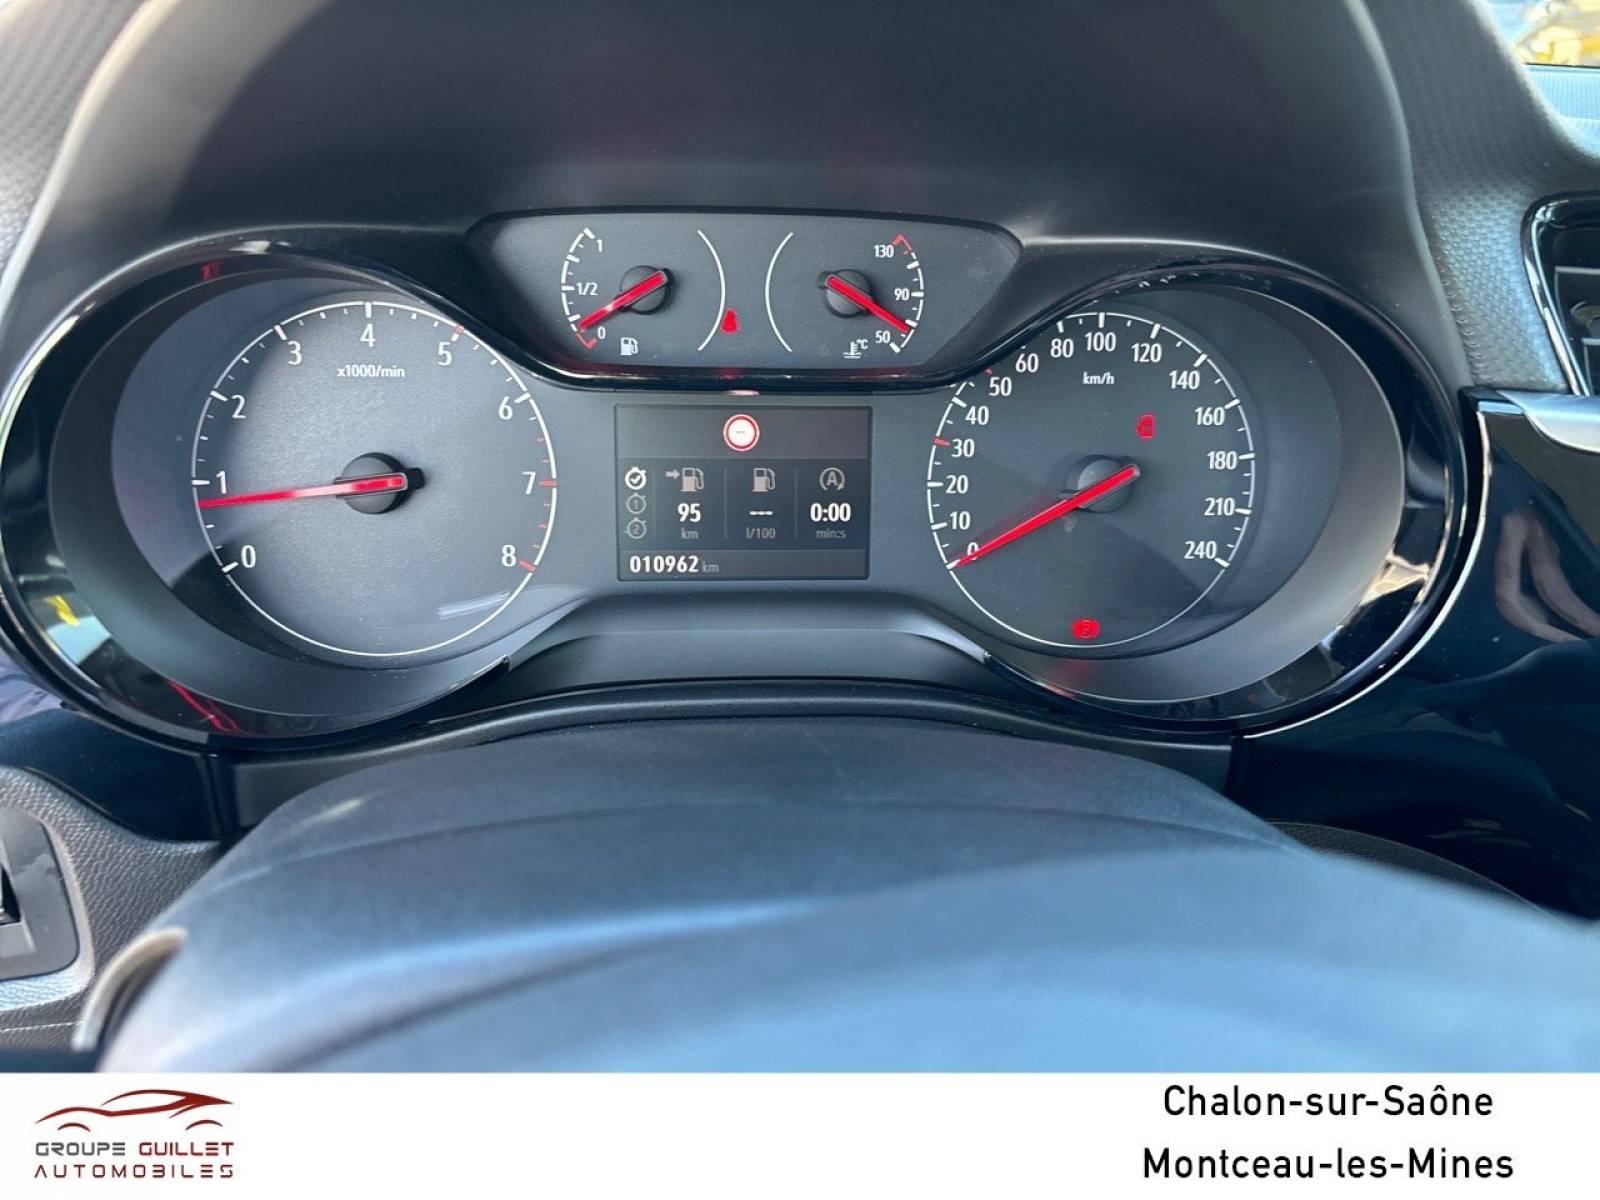 OPEL Corsa 1.2 75 ch BVM5 - véhicule d'occasion - Groupe Guillet - Opel Magicauto Chalon - 71380 - Saint-Marcel - 19